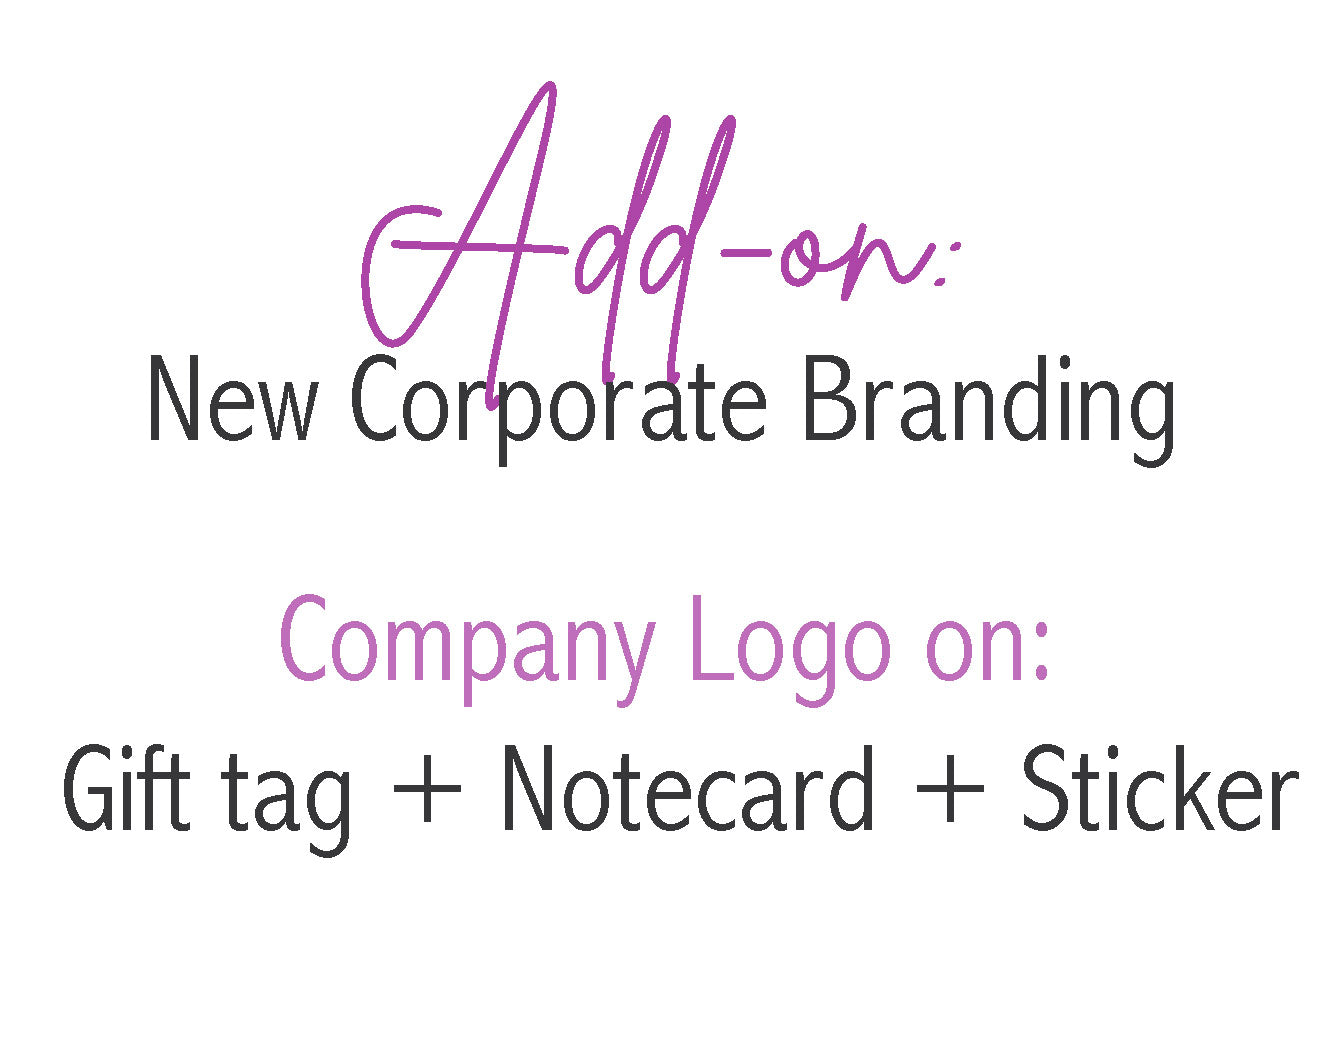 Add-on: New Corporate Branding